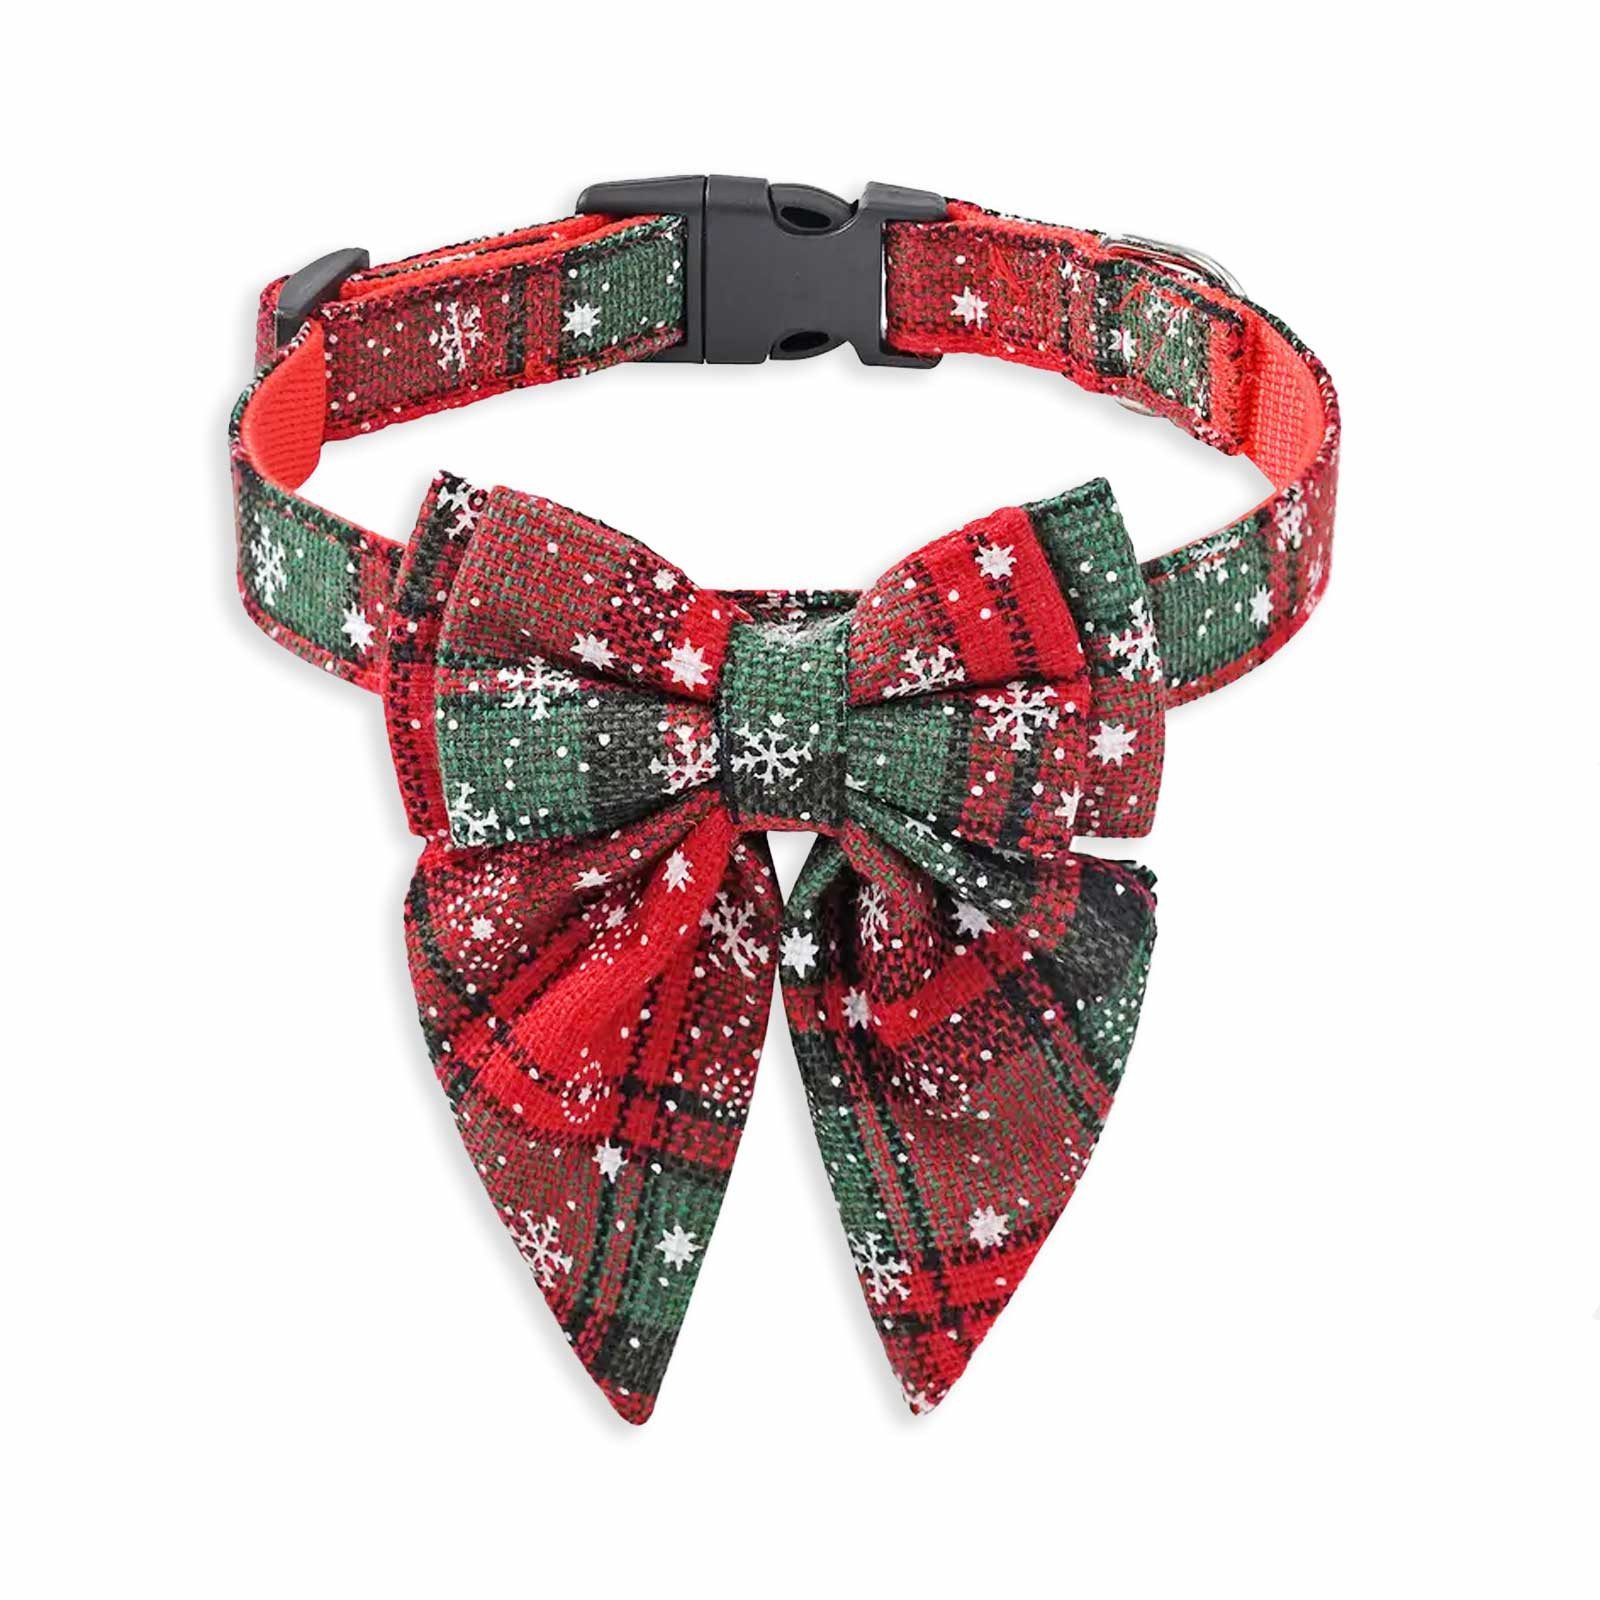 Monkimau Hunde-Halsband Hundehalsband mit Schleife in rot/grün - S